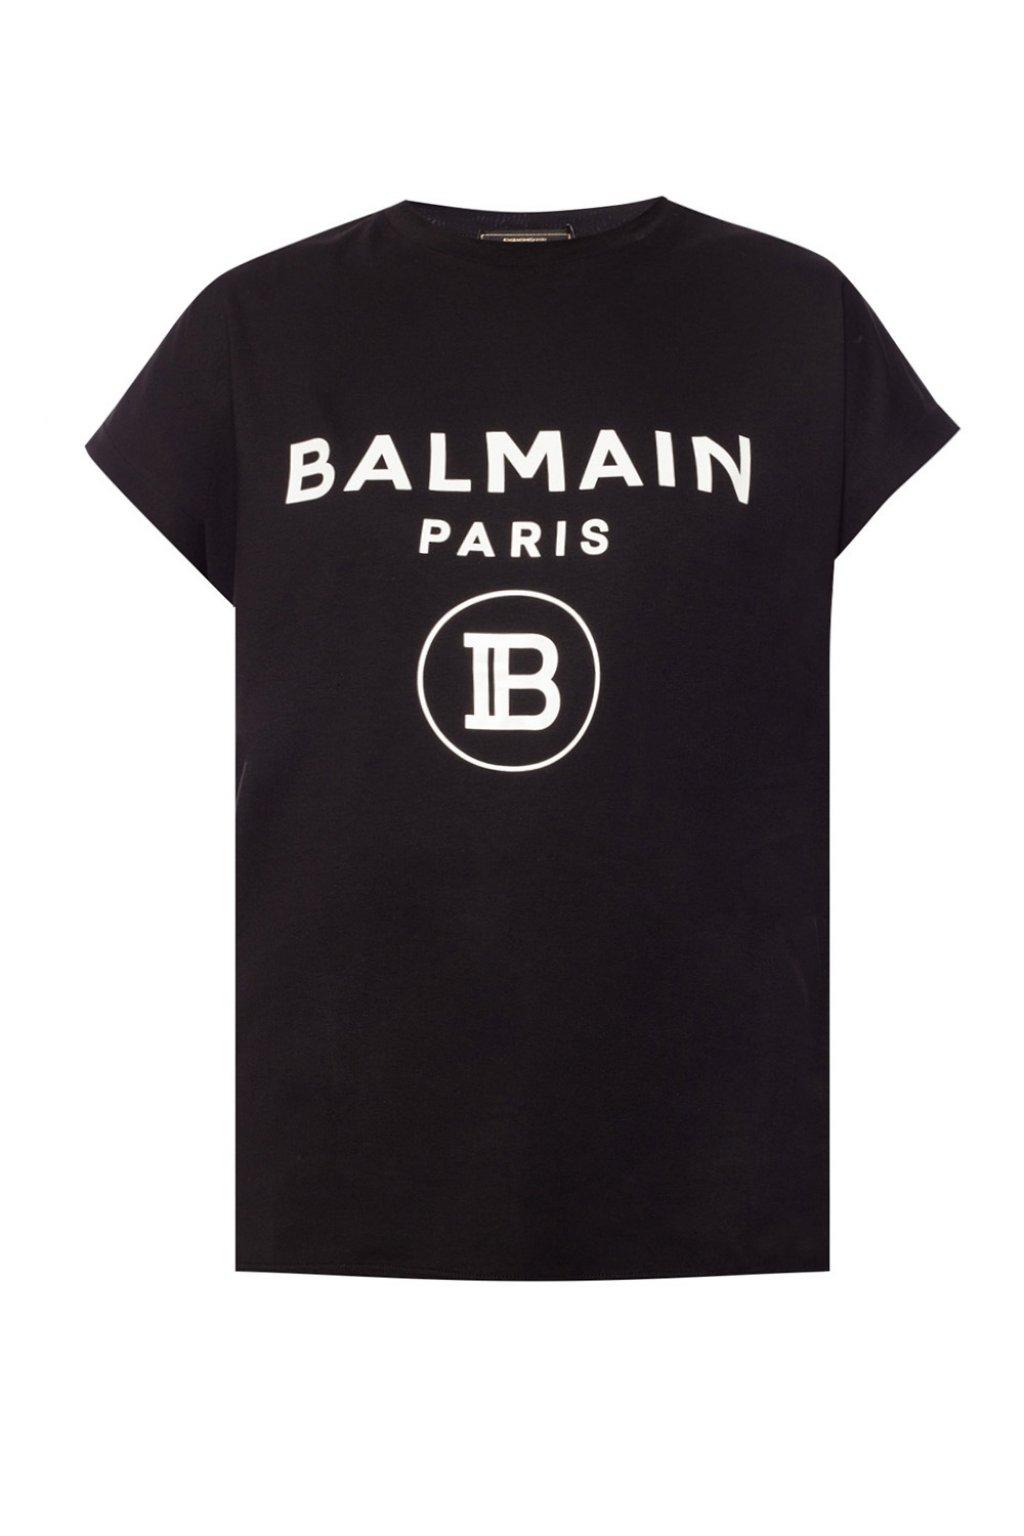 Balmain Cotton Black T-shirt With Print - Lyst